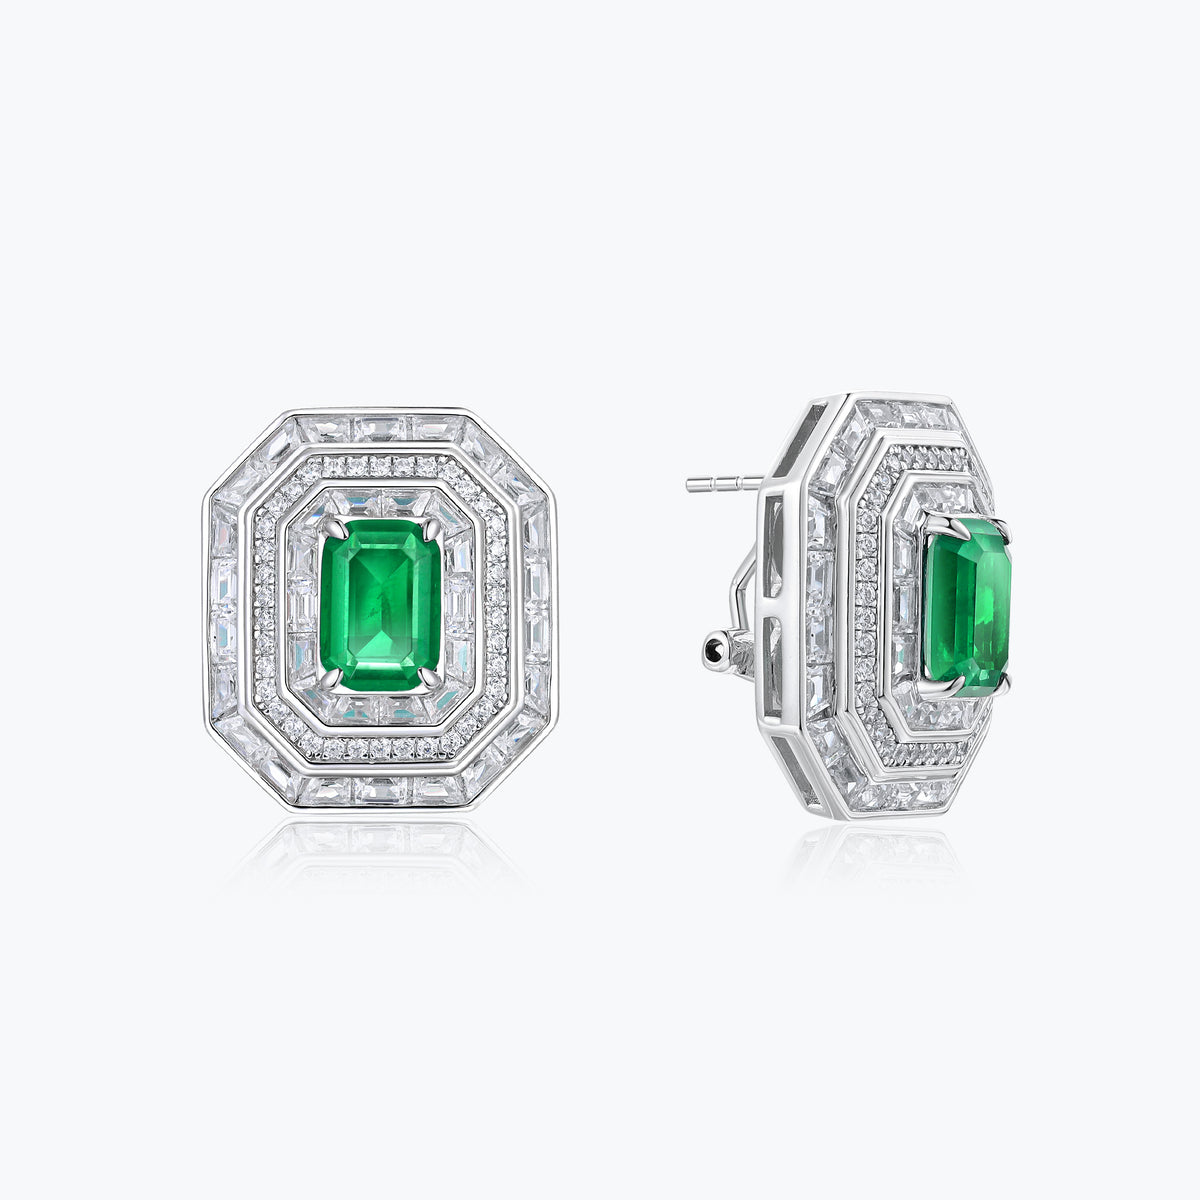 Dissoo® Classic Geometric Art Deco Emerald Green Earrings